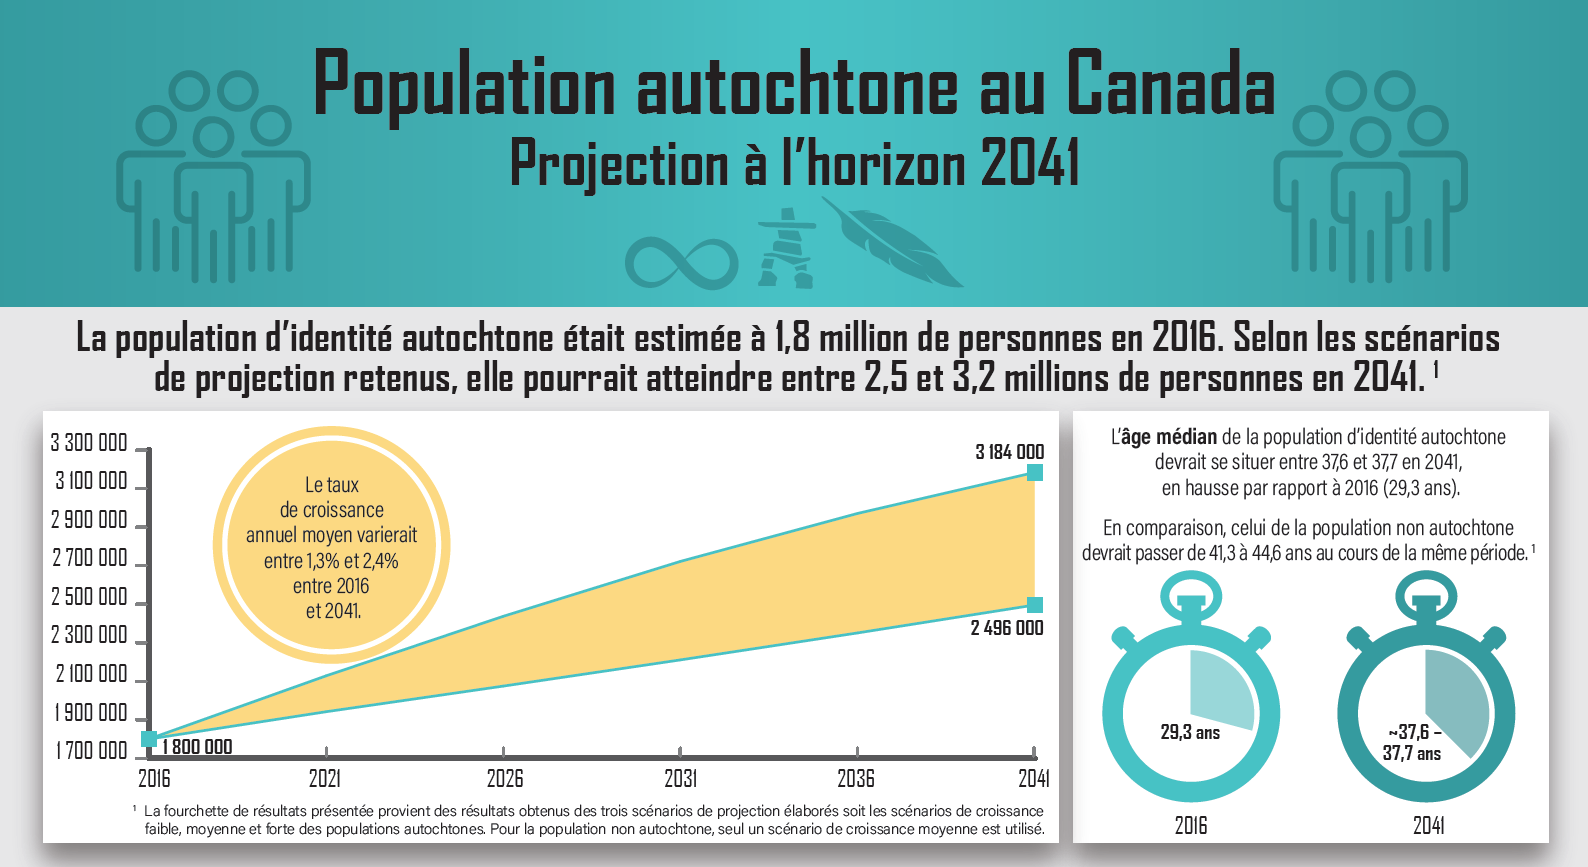 Population autochtone au Canada – projections jusqu'en 2041